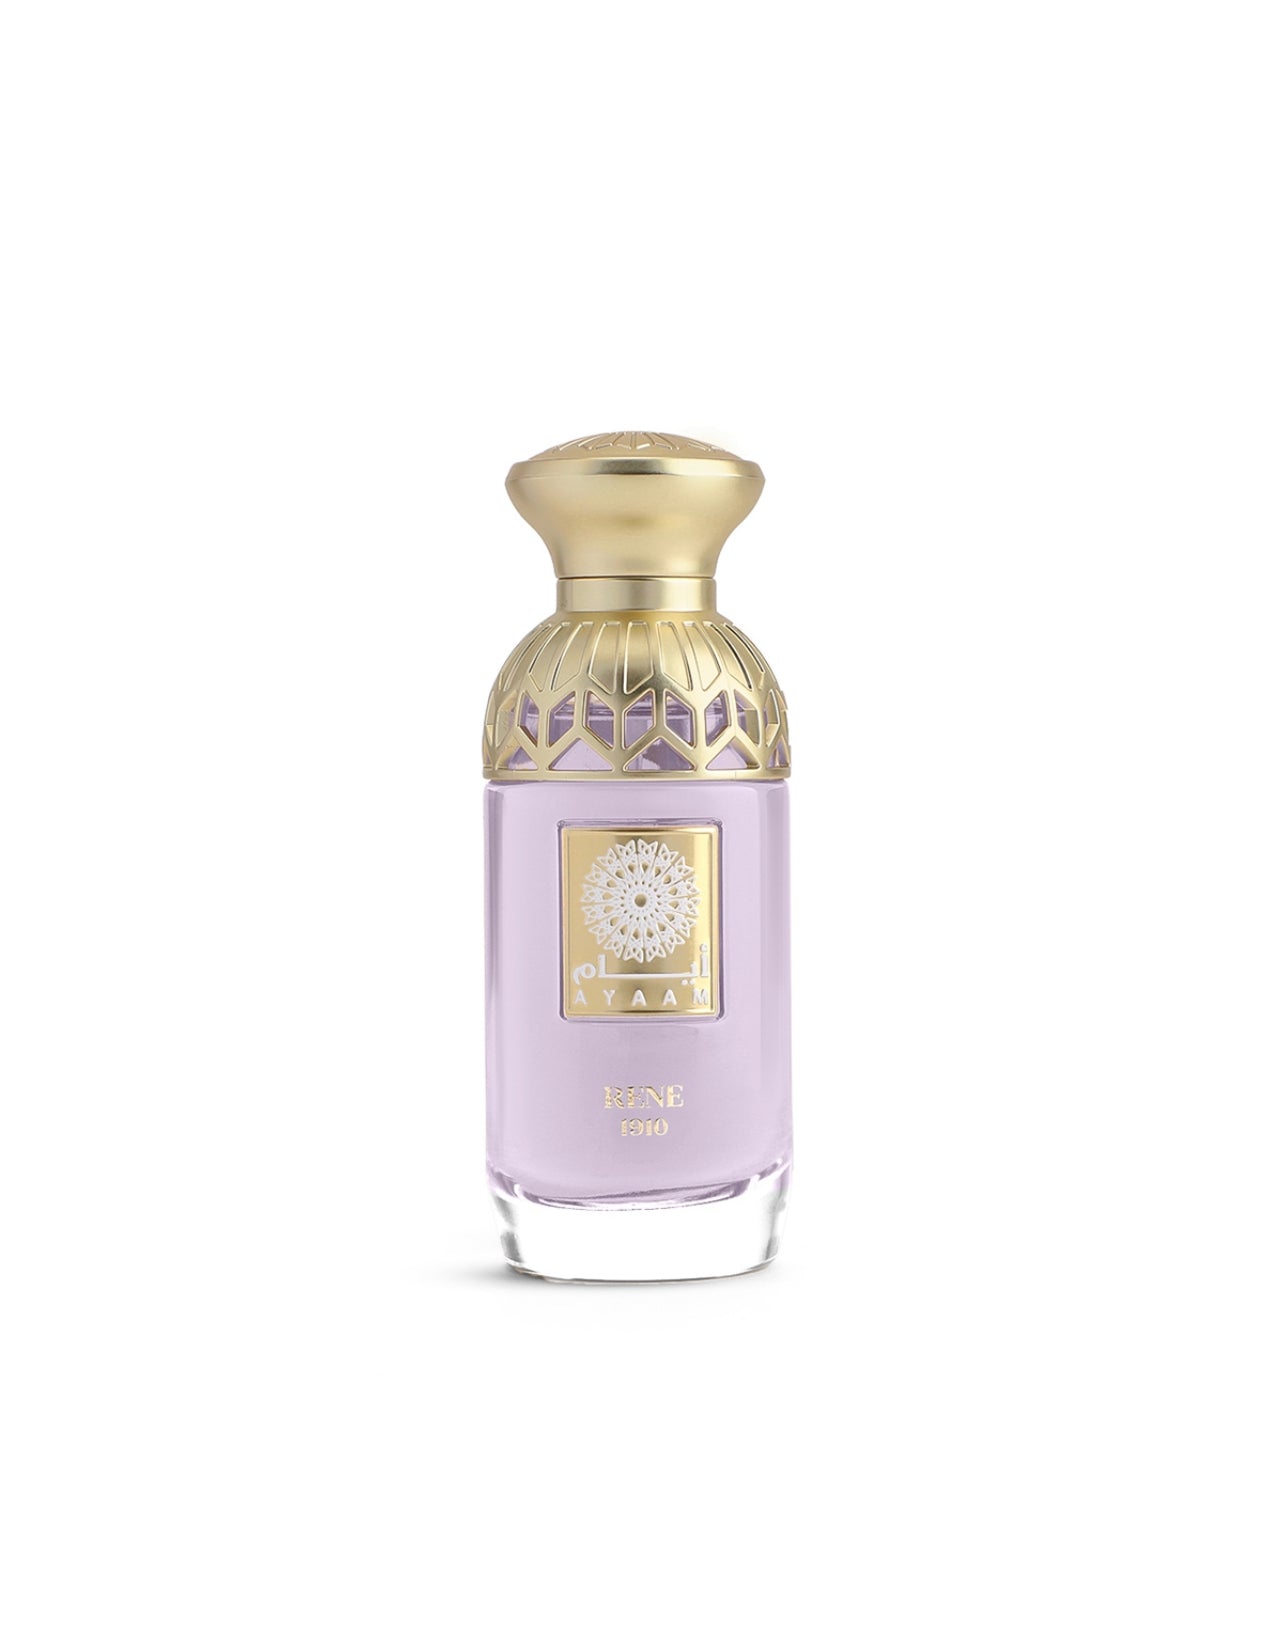 Rene 1910 Eau de Parfum - 50ml